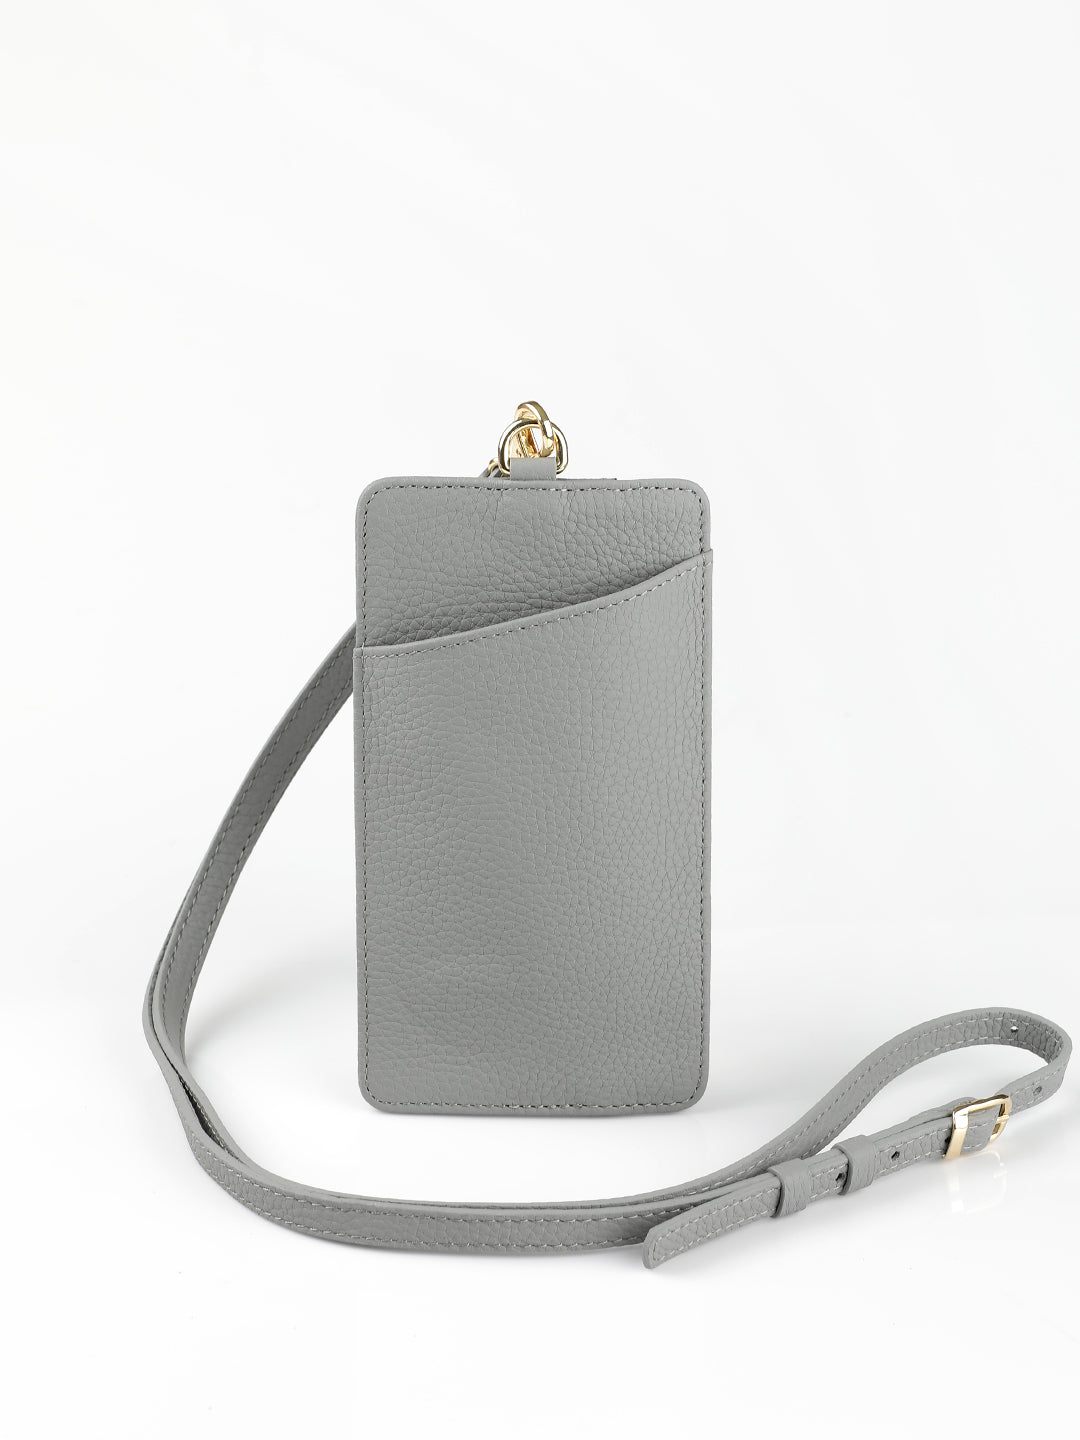 Gigi S Leather Phone Wallet Grey